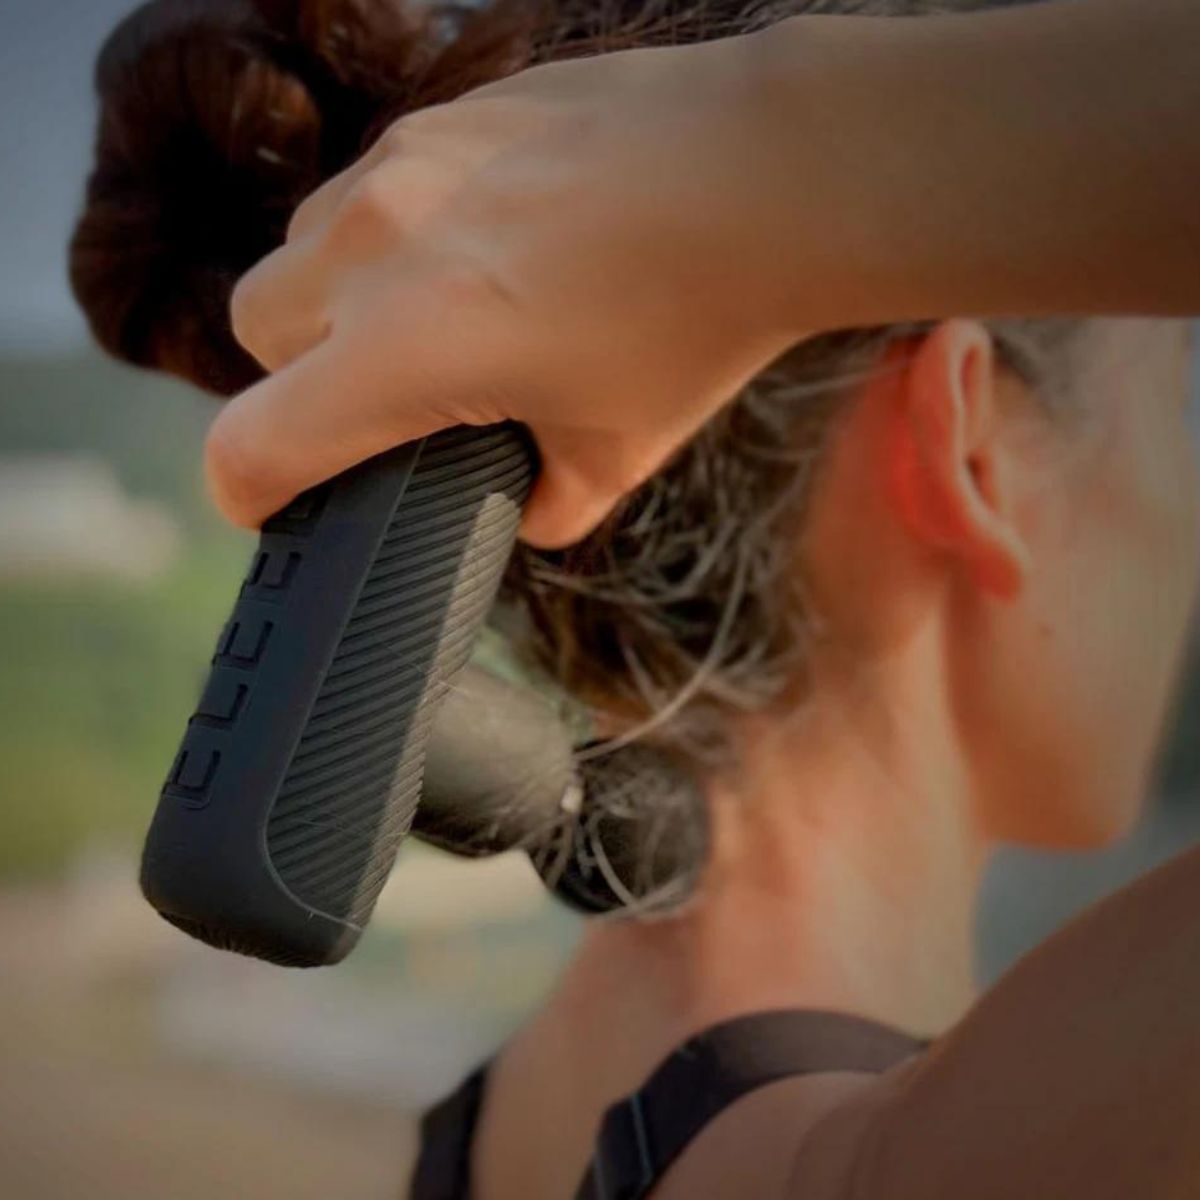 P2 Pocket Massage Gun | Eleeels - Wake Concept Store  